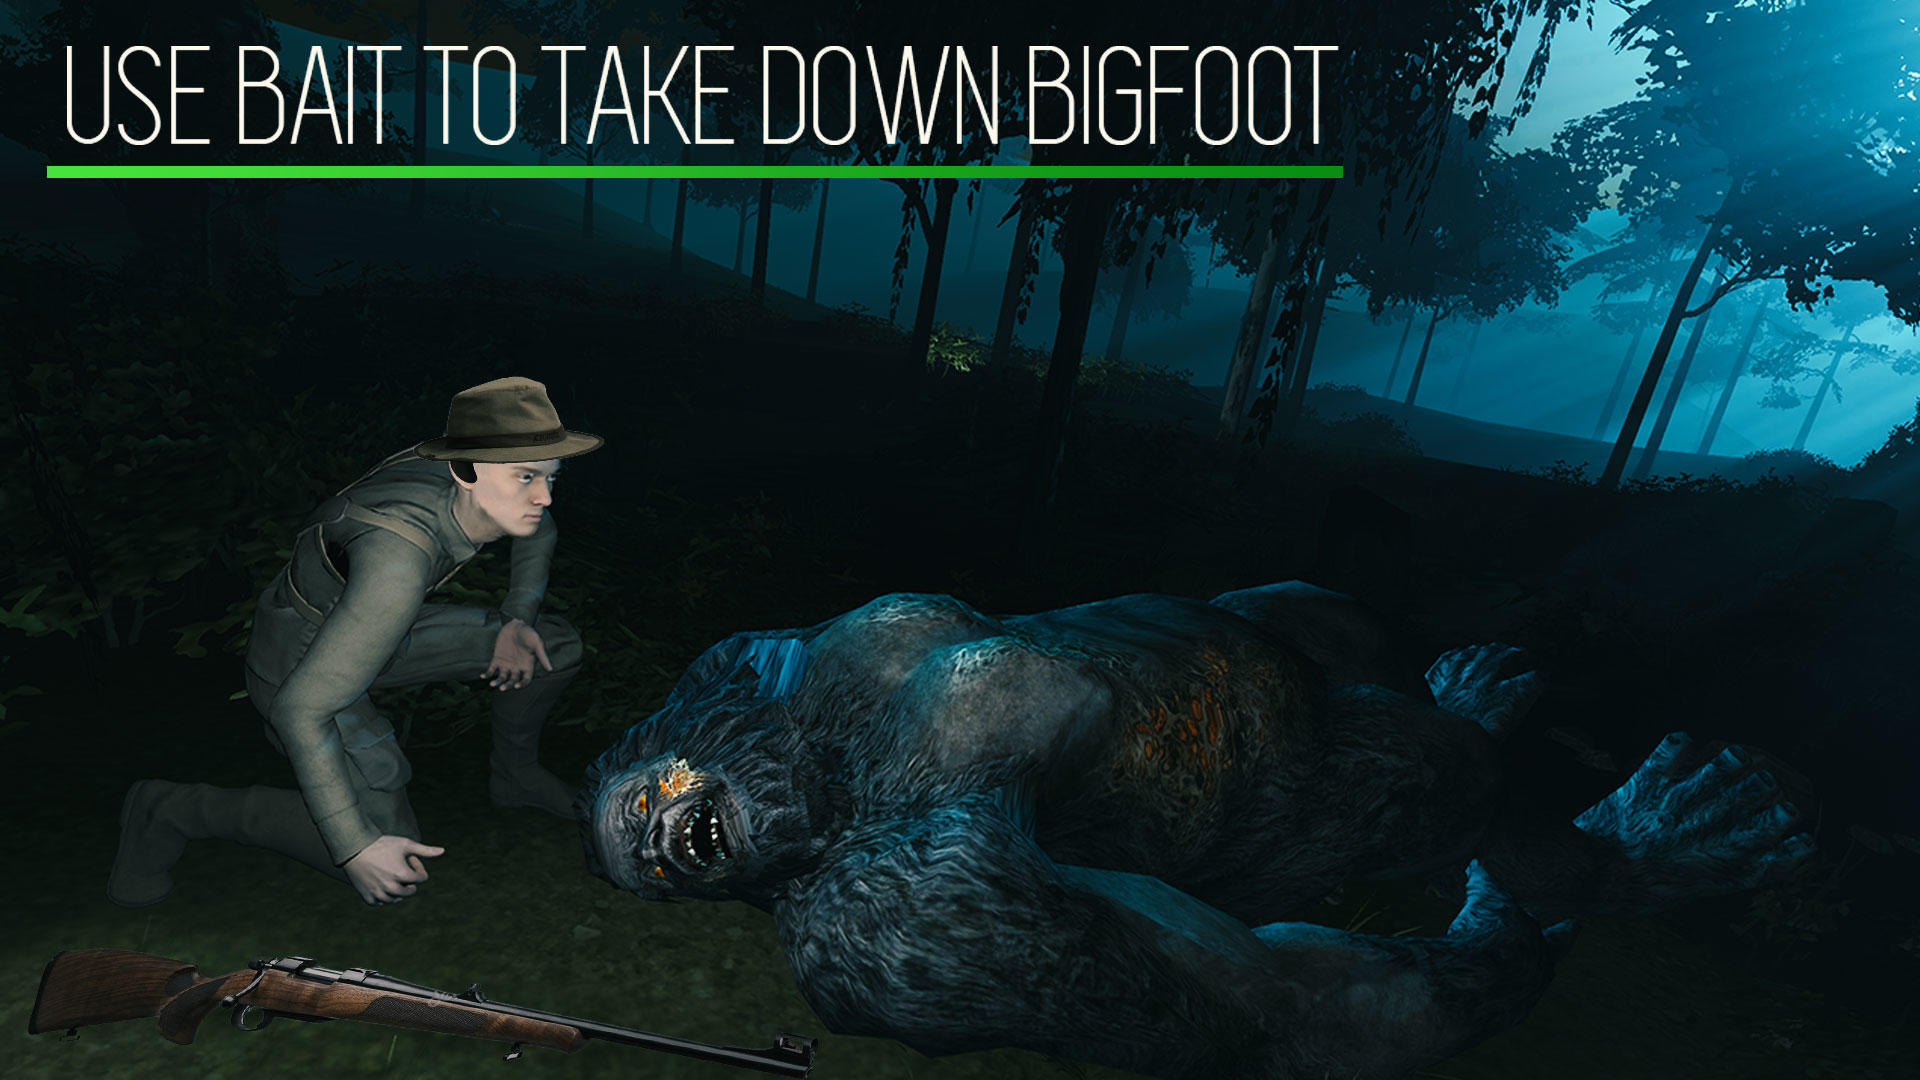 Download do APK de Finding Bigfoot Survival para Android